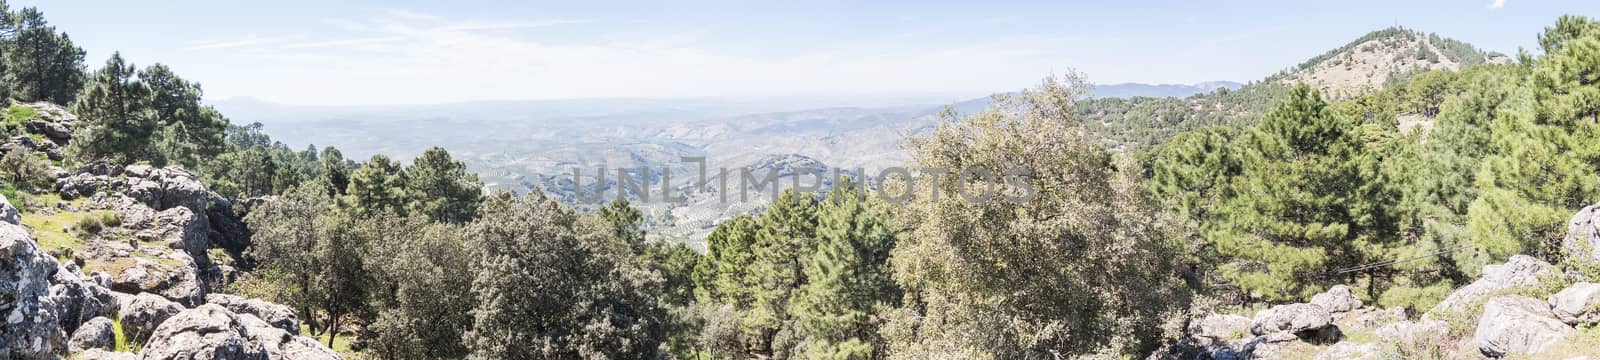 Paso del aire viewpoint in Sierra de Cazorla, Jaen, Spain by max8xam